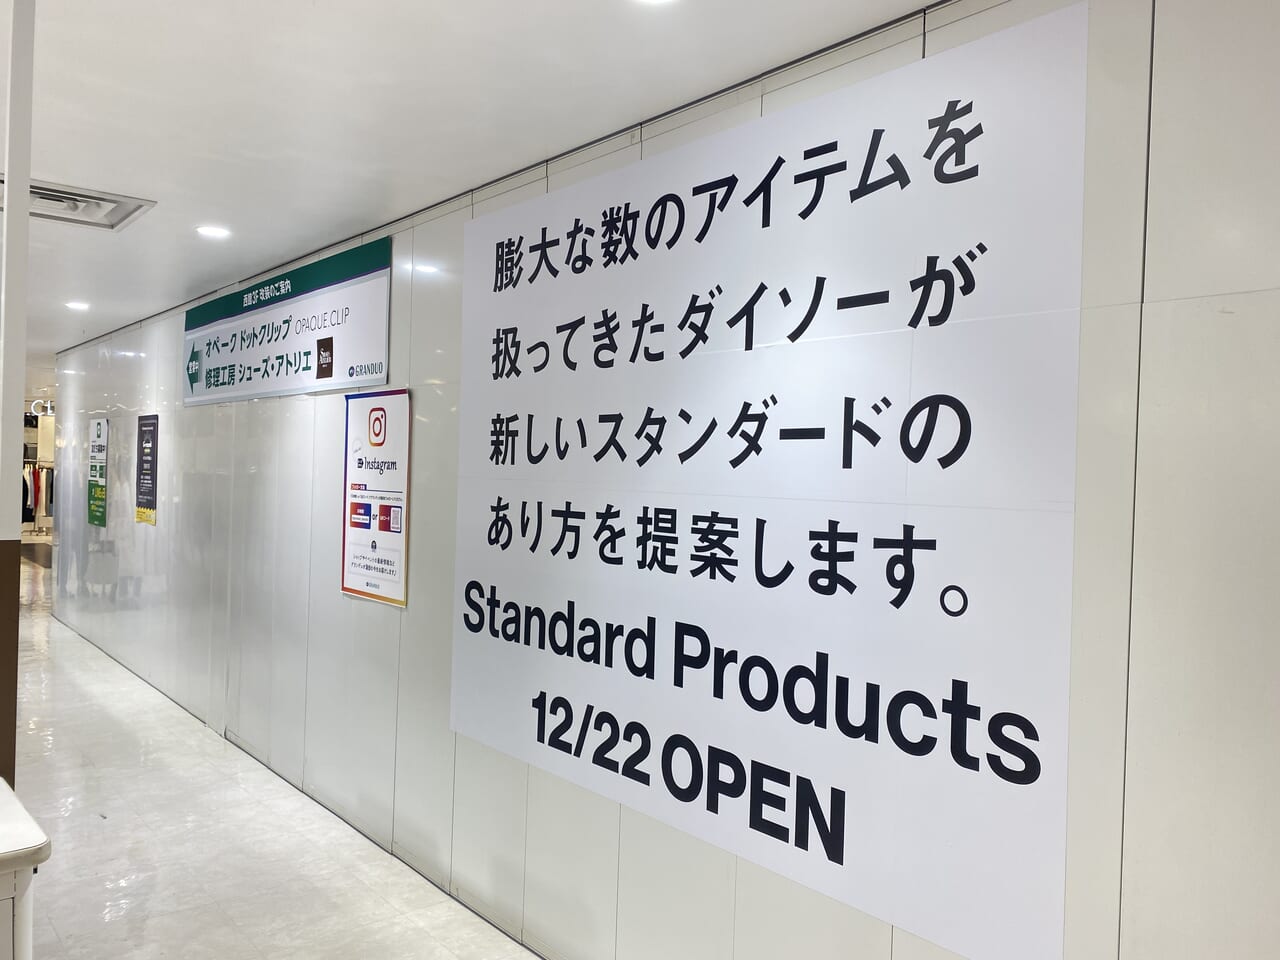 Standard Productsグランデュオ蒲田店OPEN